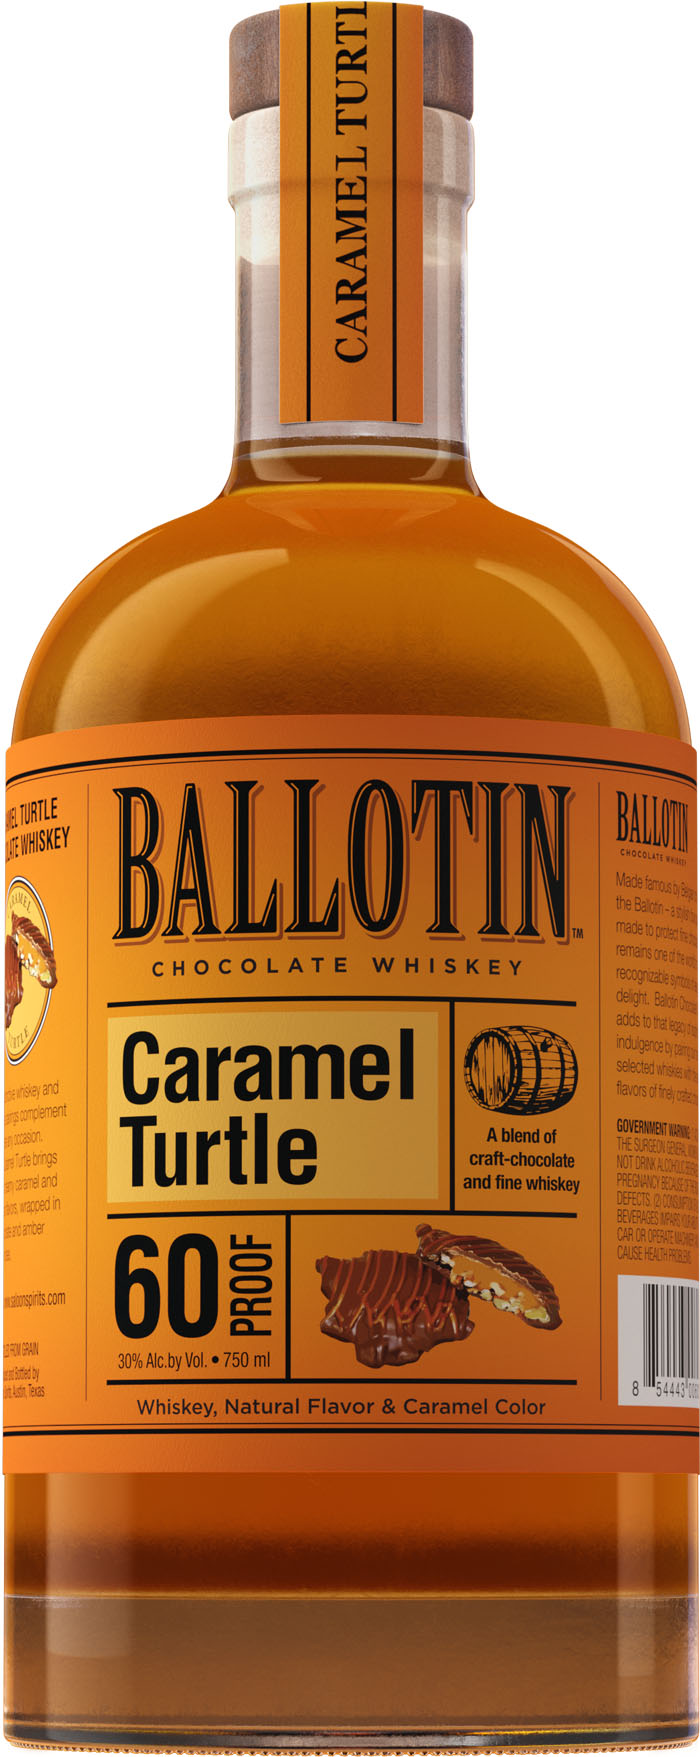 Ballotin Caramel Turtle